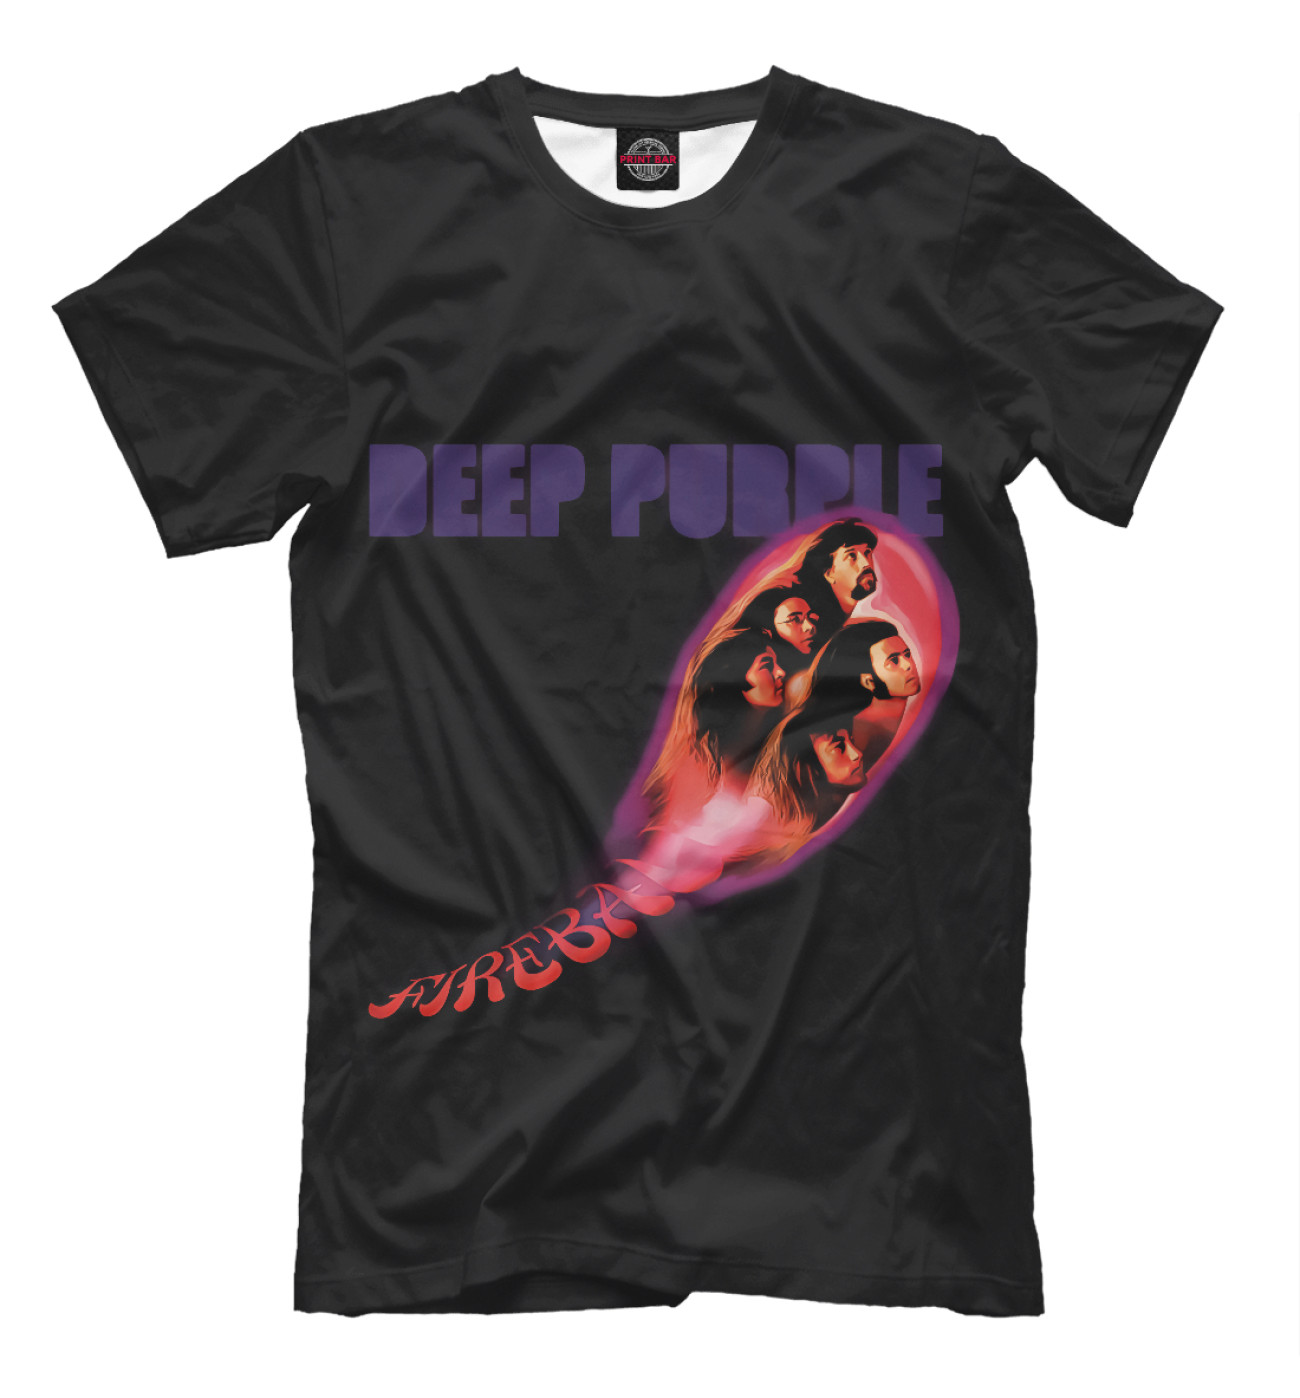 Мужская Футболка Deep Purple, артикул: PUR-247475-fut-2